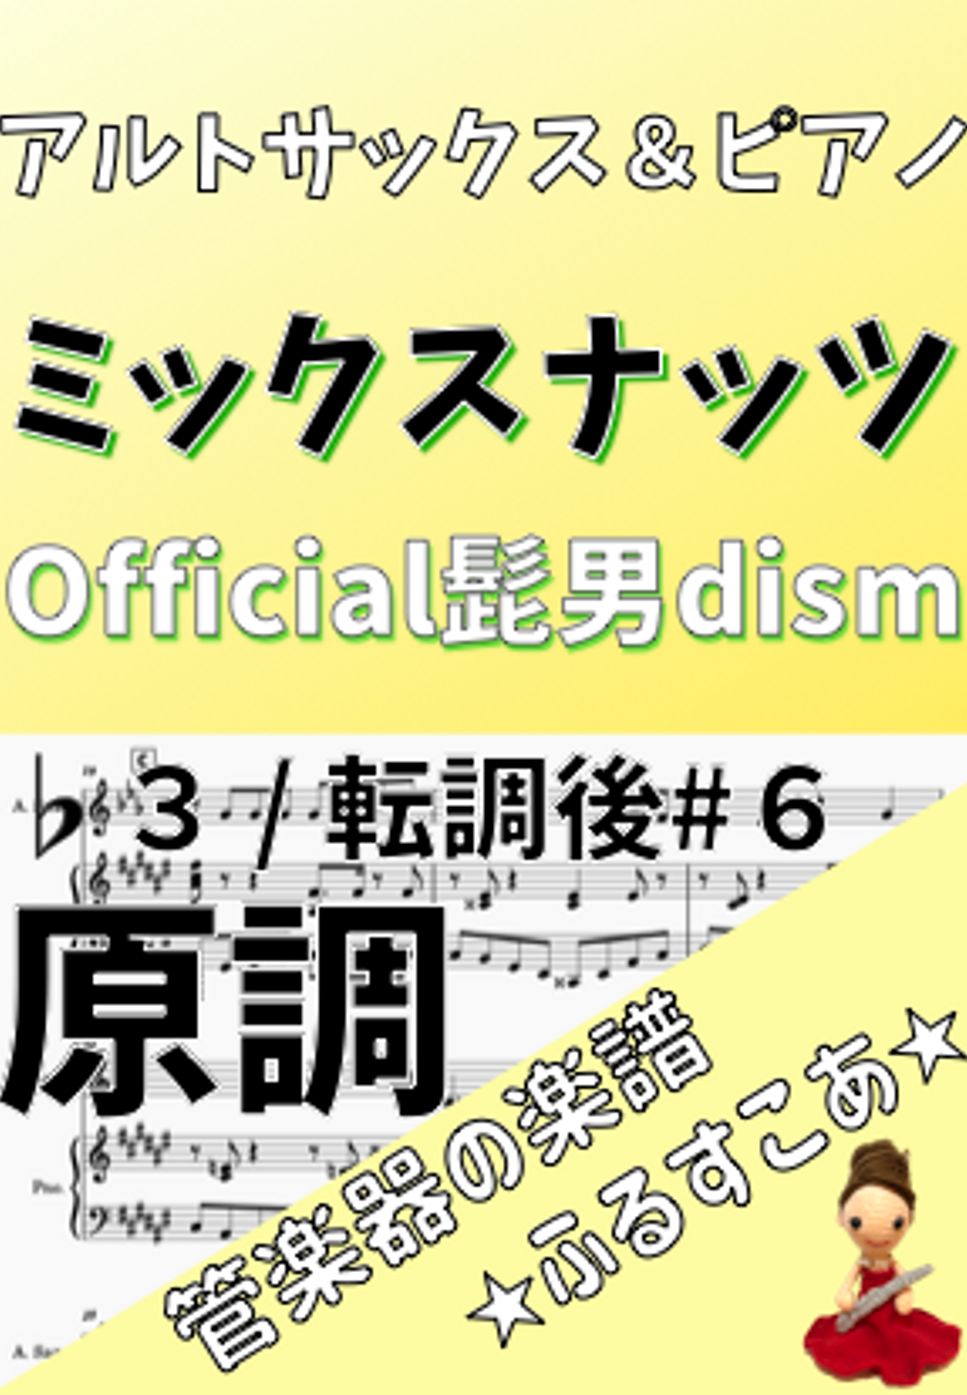 Official髭男dism - 【アルトサックス＆ピアノ】原調ミックスナッツ（Official髭男dism） by 管楽器の楽譜★ふるすこあ